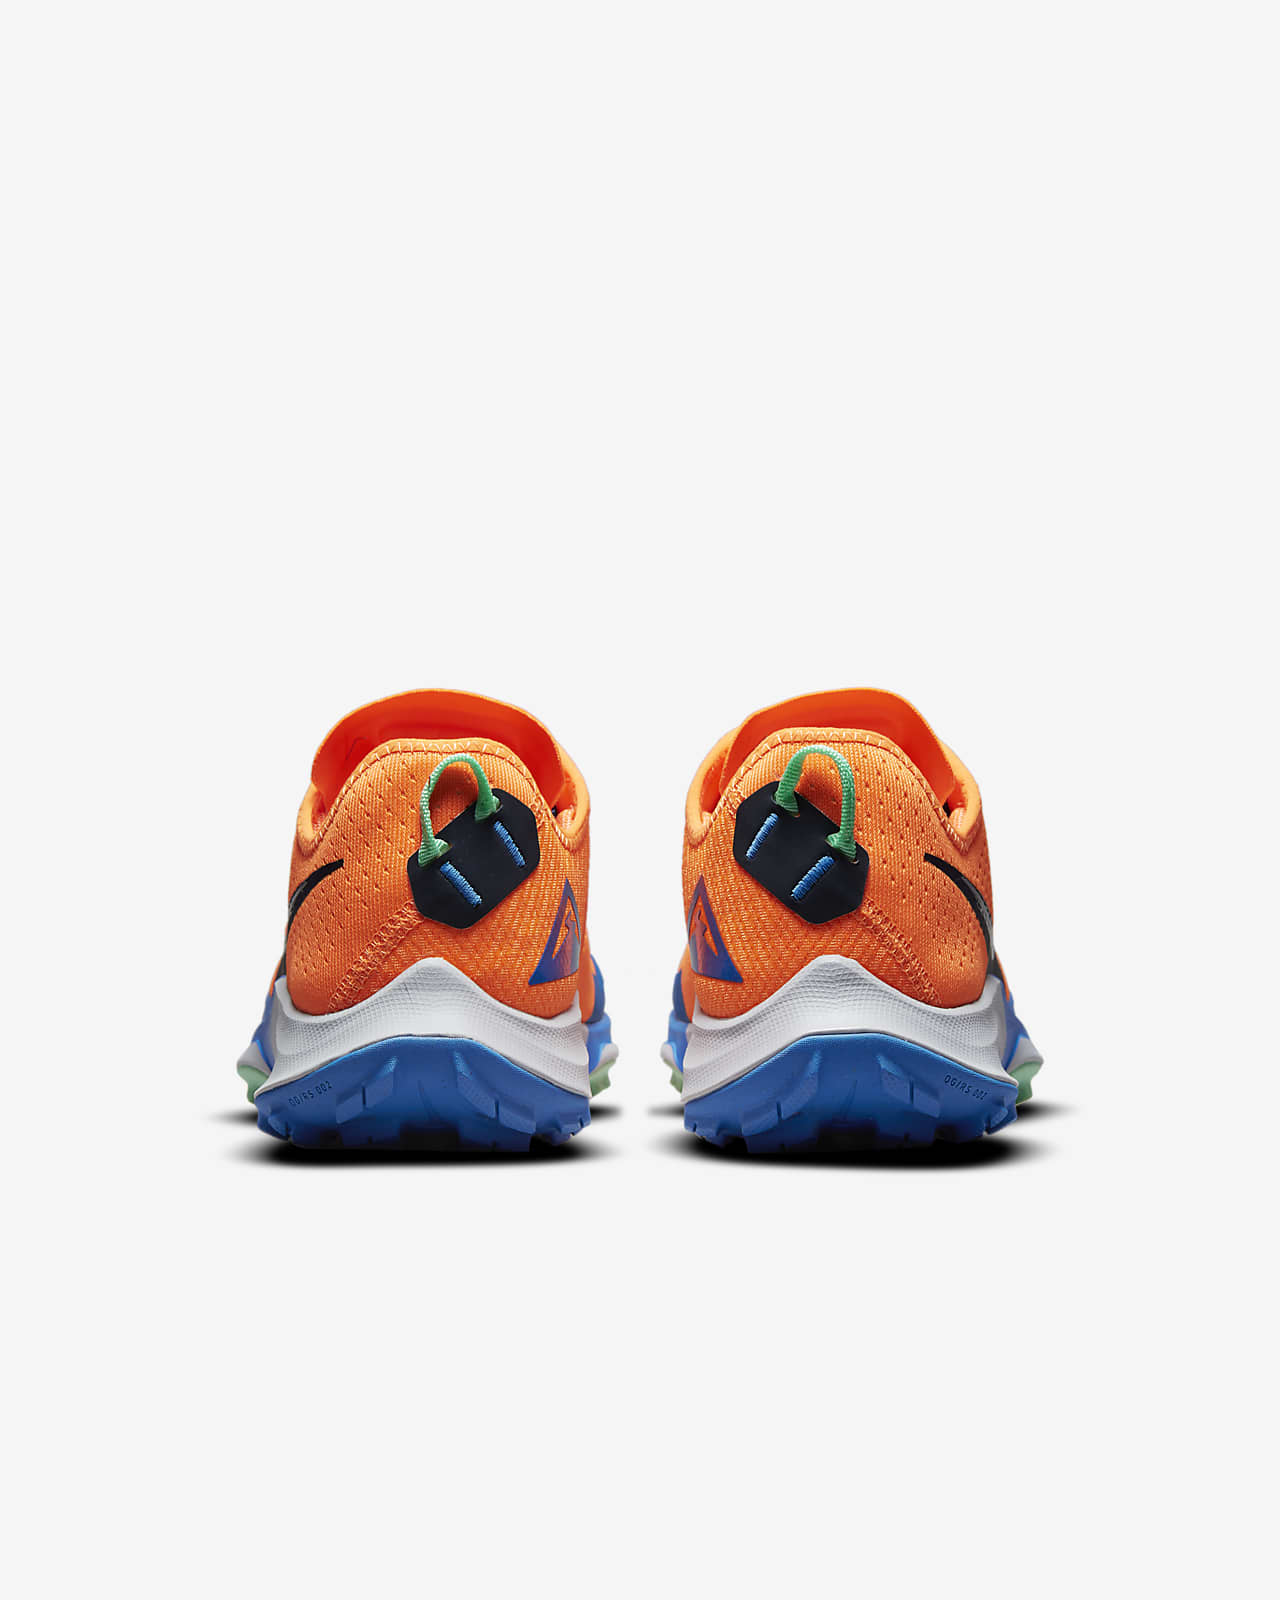 Nike Terra Kiger 7 Men's Trail Running Shoes